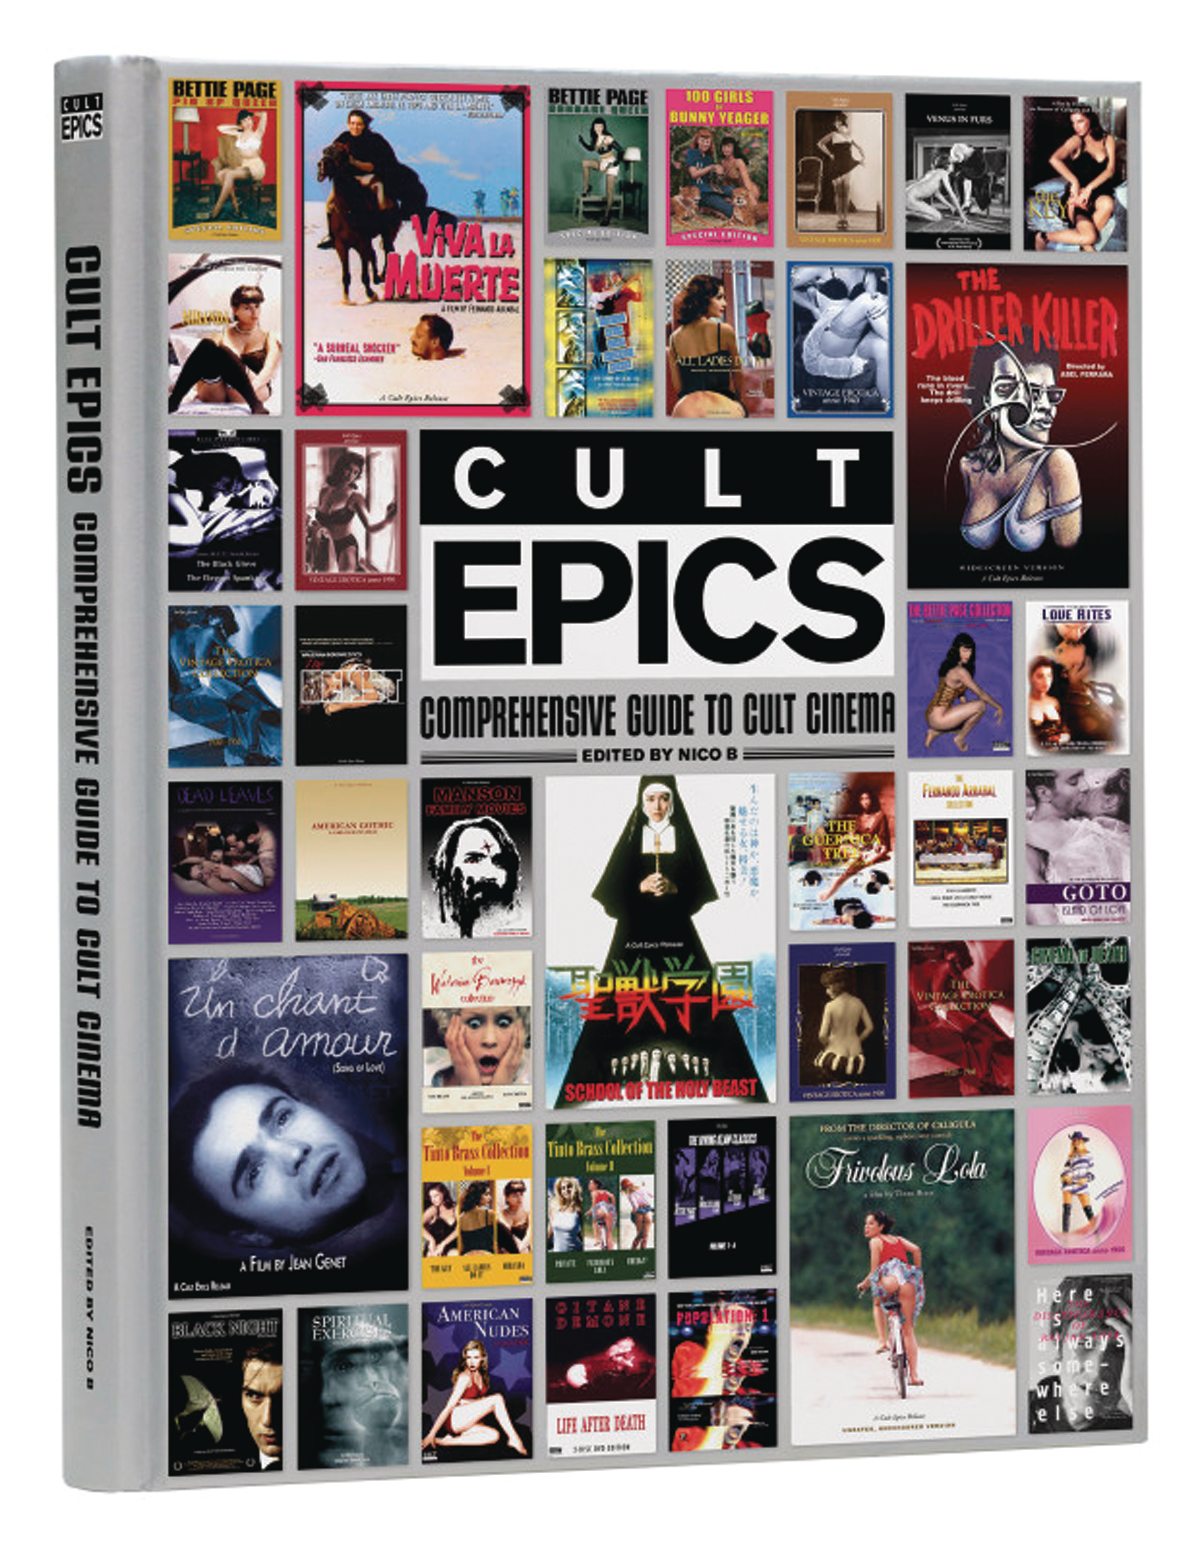 Cult Epics: Comprehensive Guide to Cult Cinema